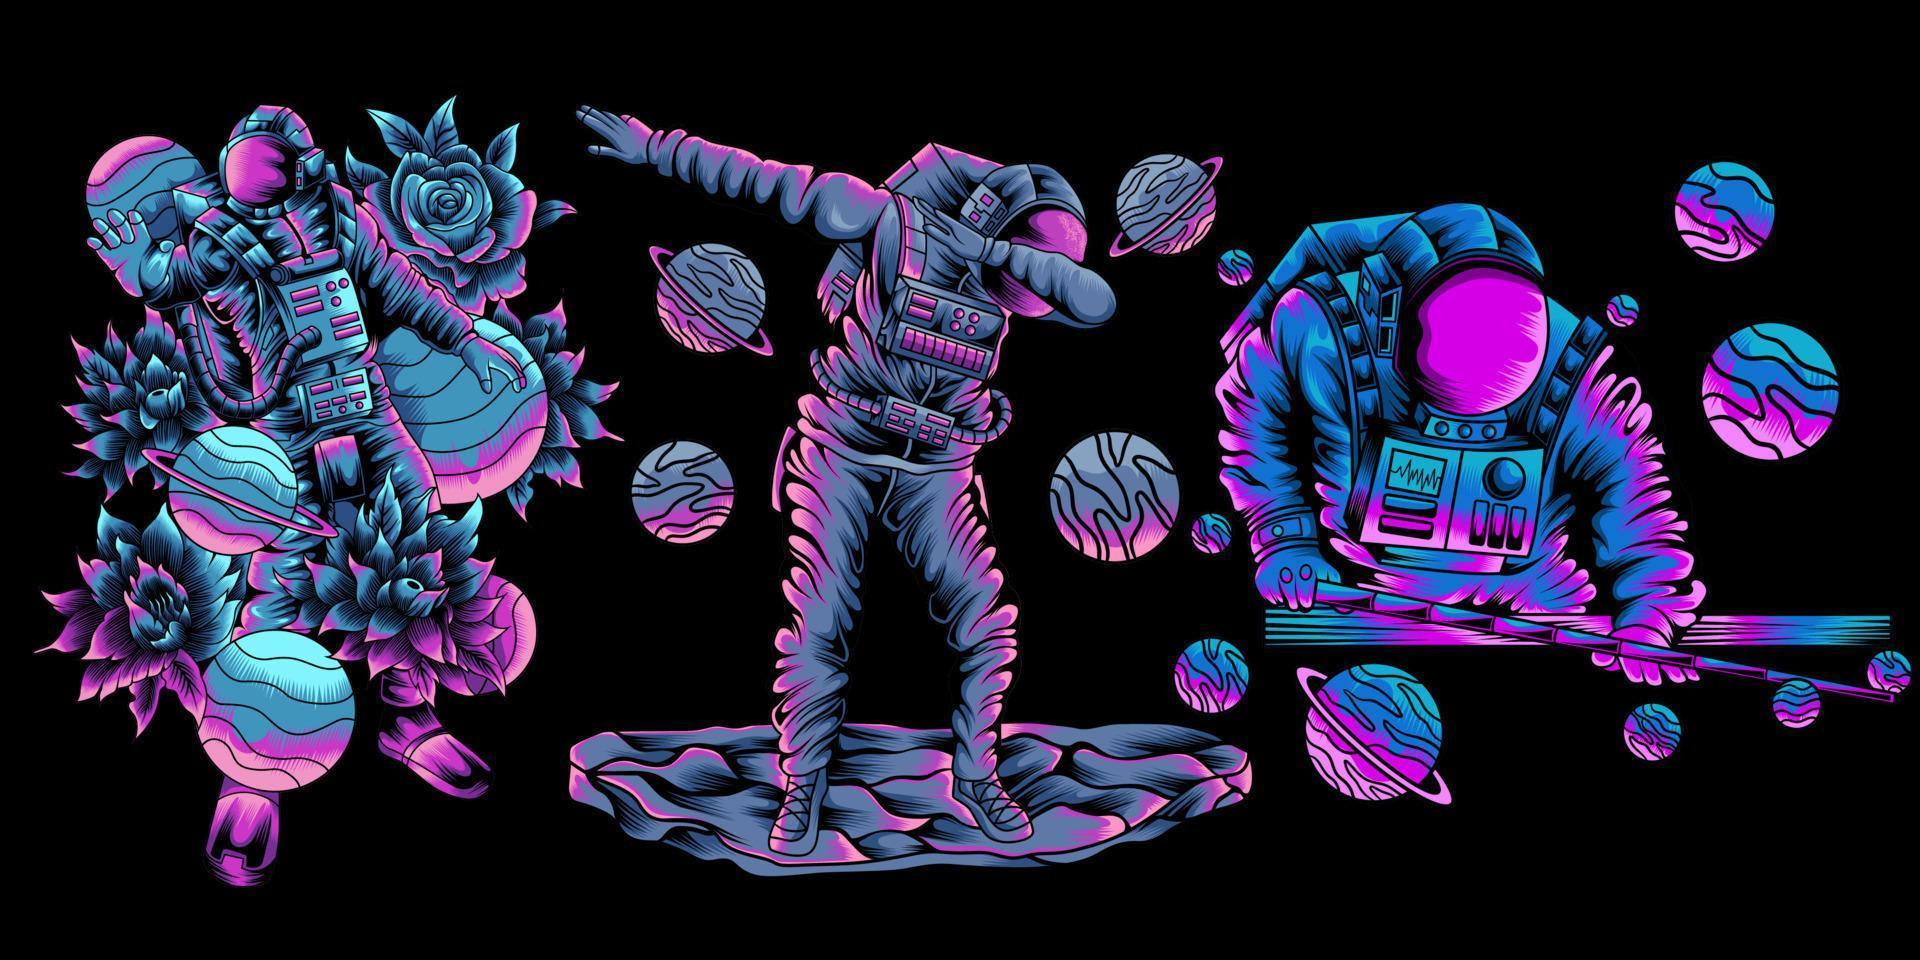 Astronaut dab pose dance vector image illustrations